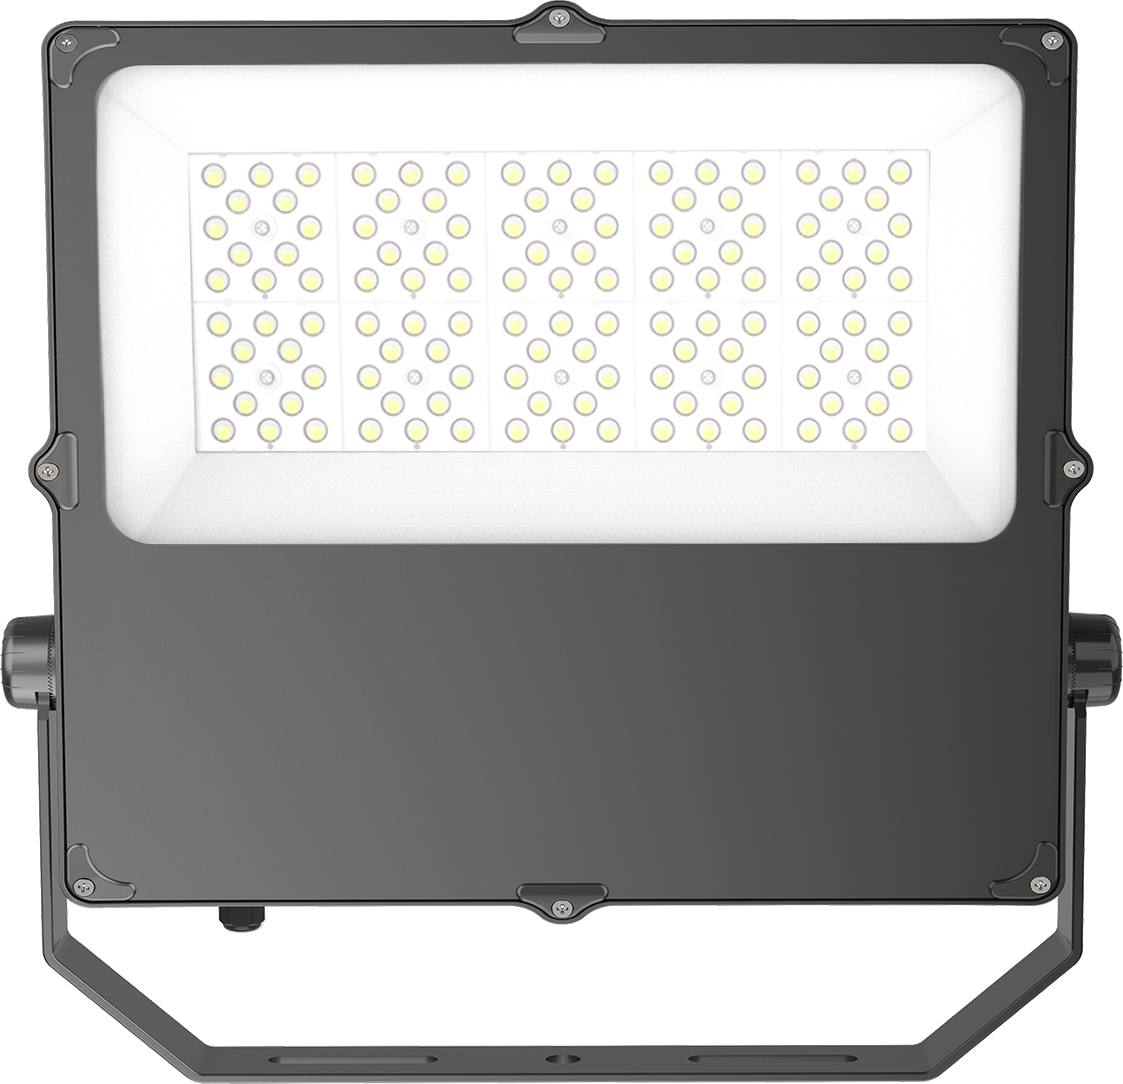 Ultra-thin outdoor waterproof IP66 30W-400W Outdoor LED Flood Lights